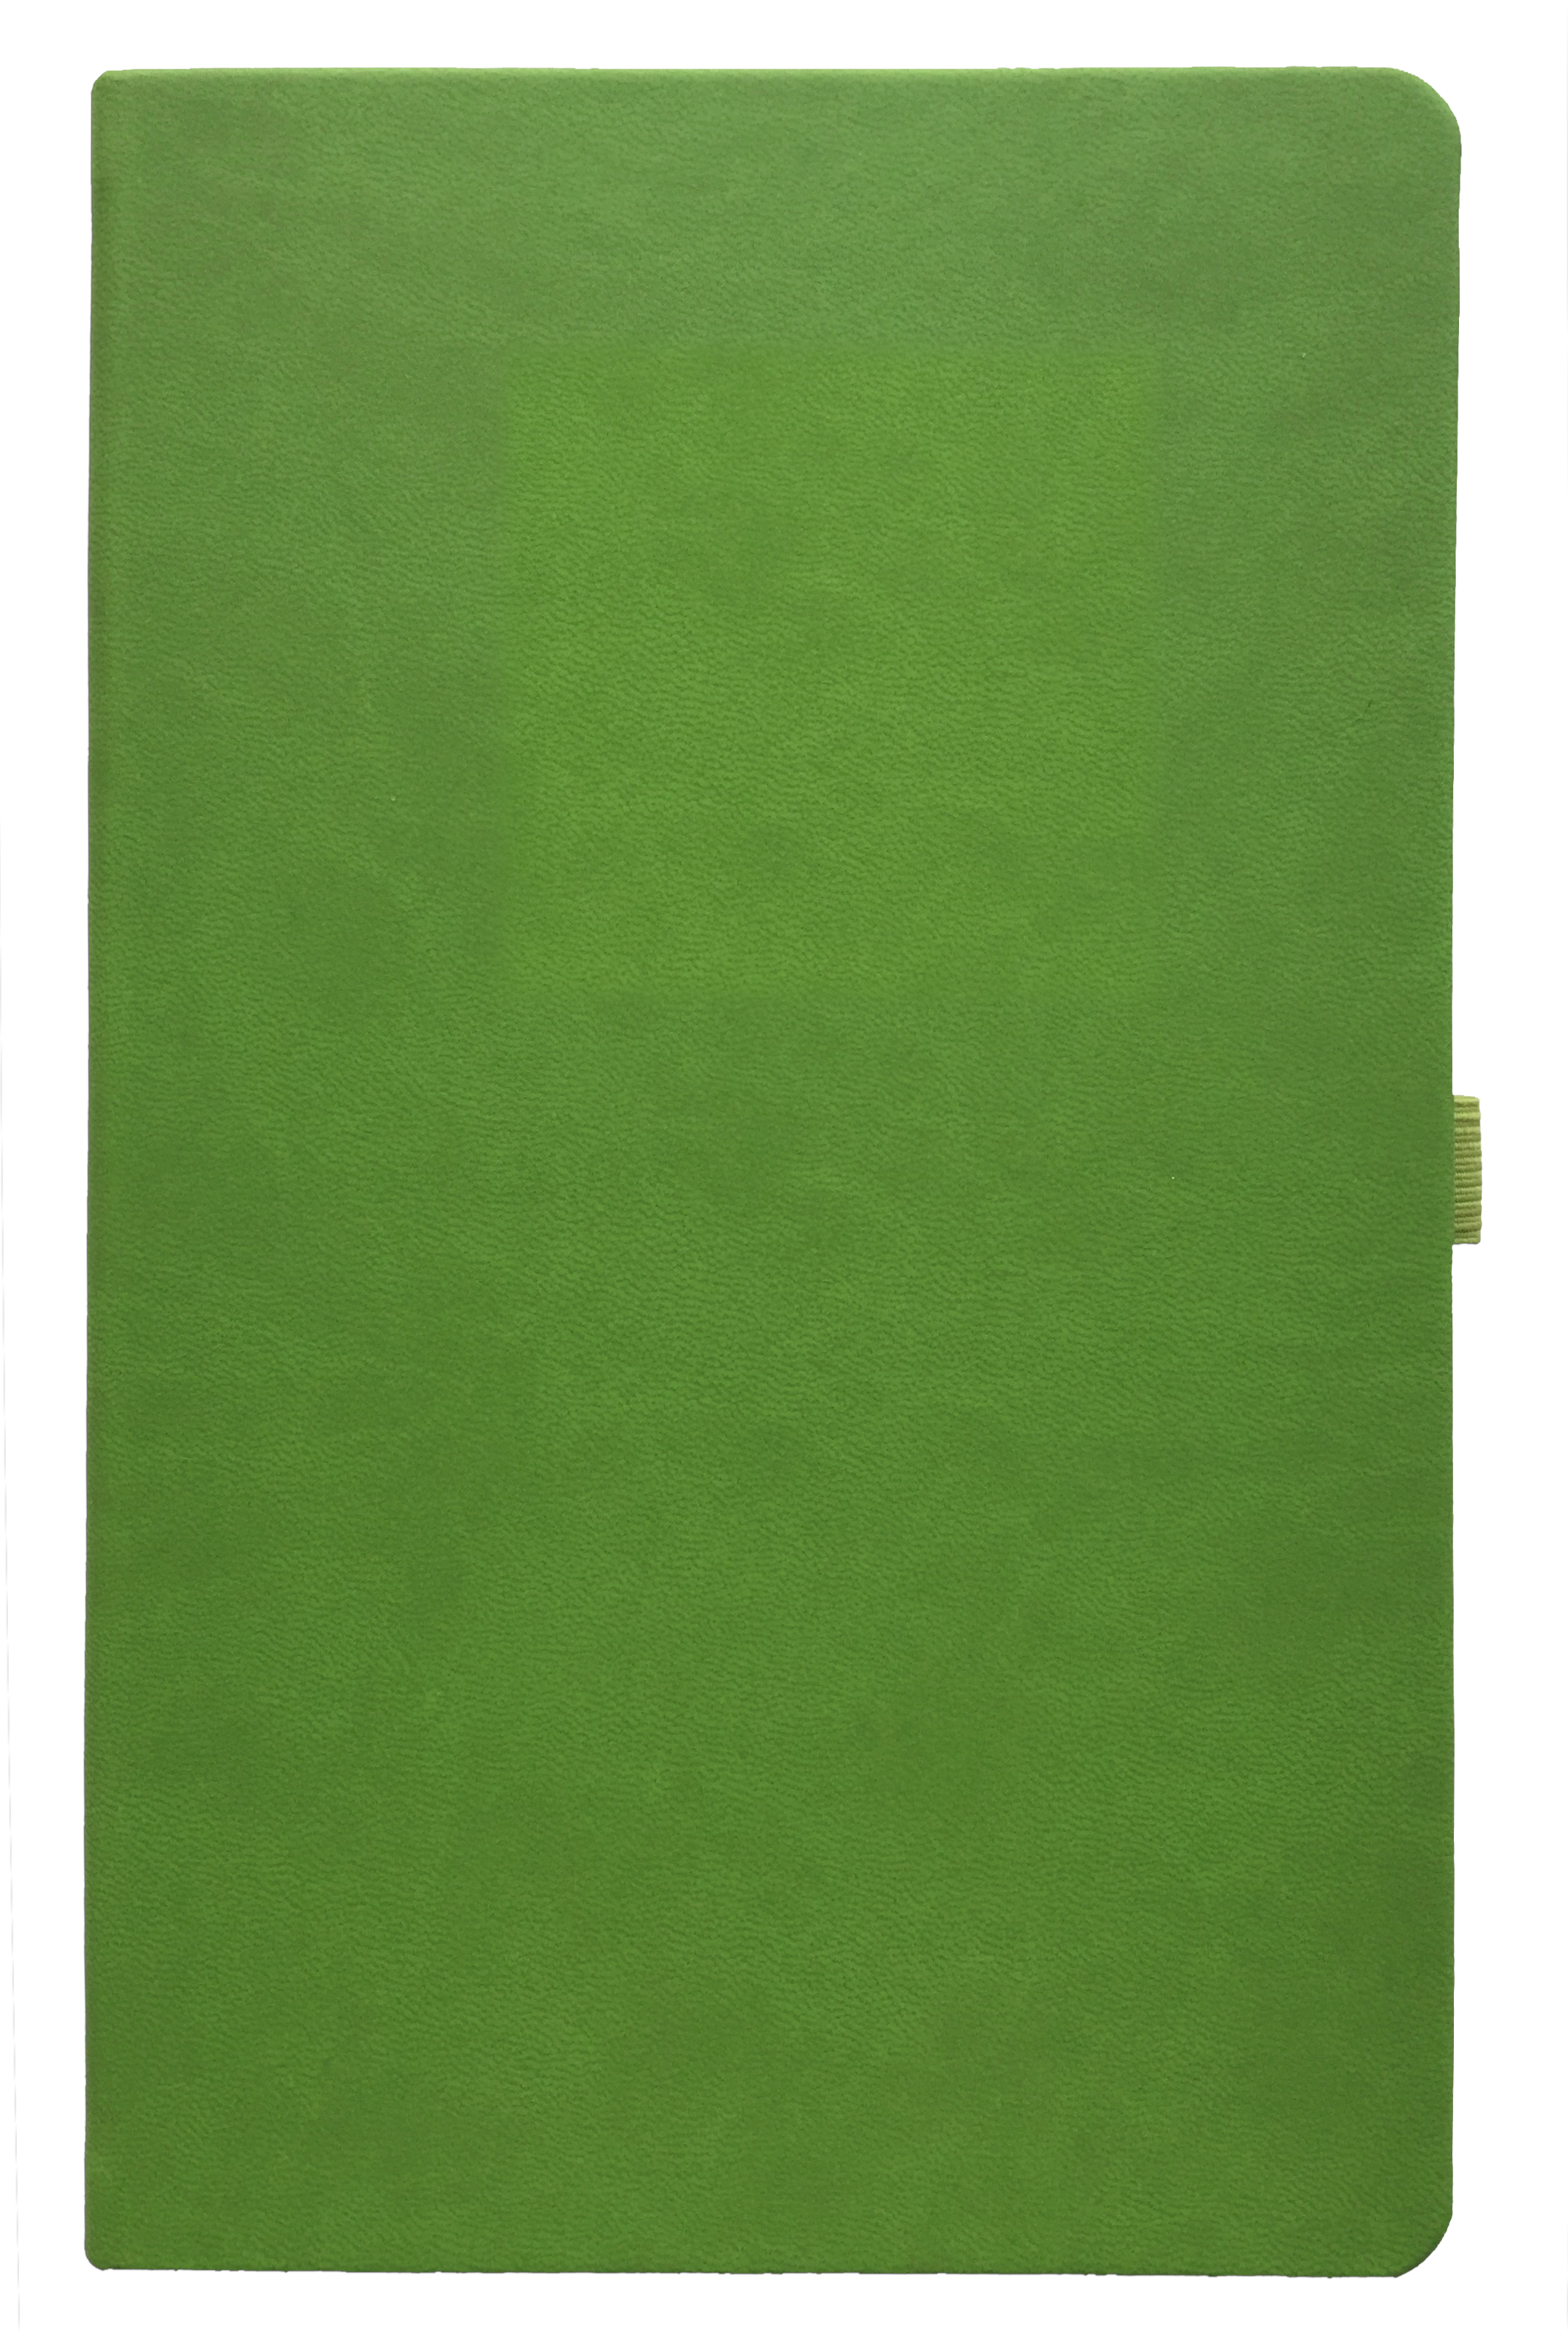 Notizbuch 9 x 14 cm , kariert, 192 S., grün